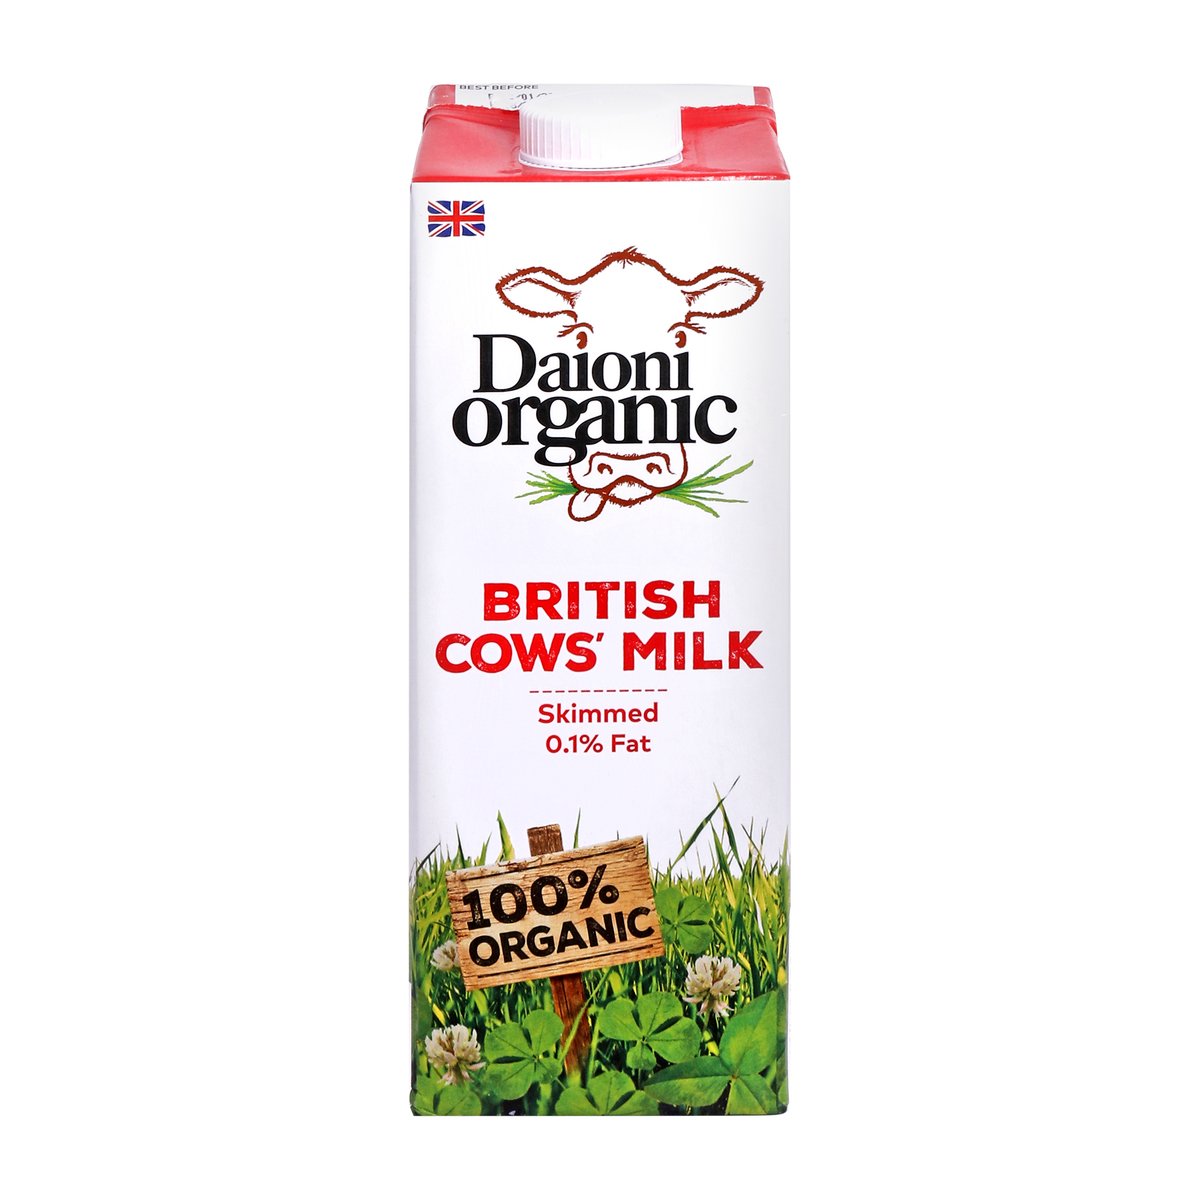 Daioni Organic British Skimmed Cows Milk 1 Litre